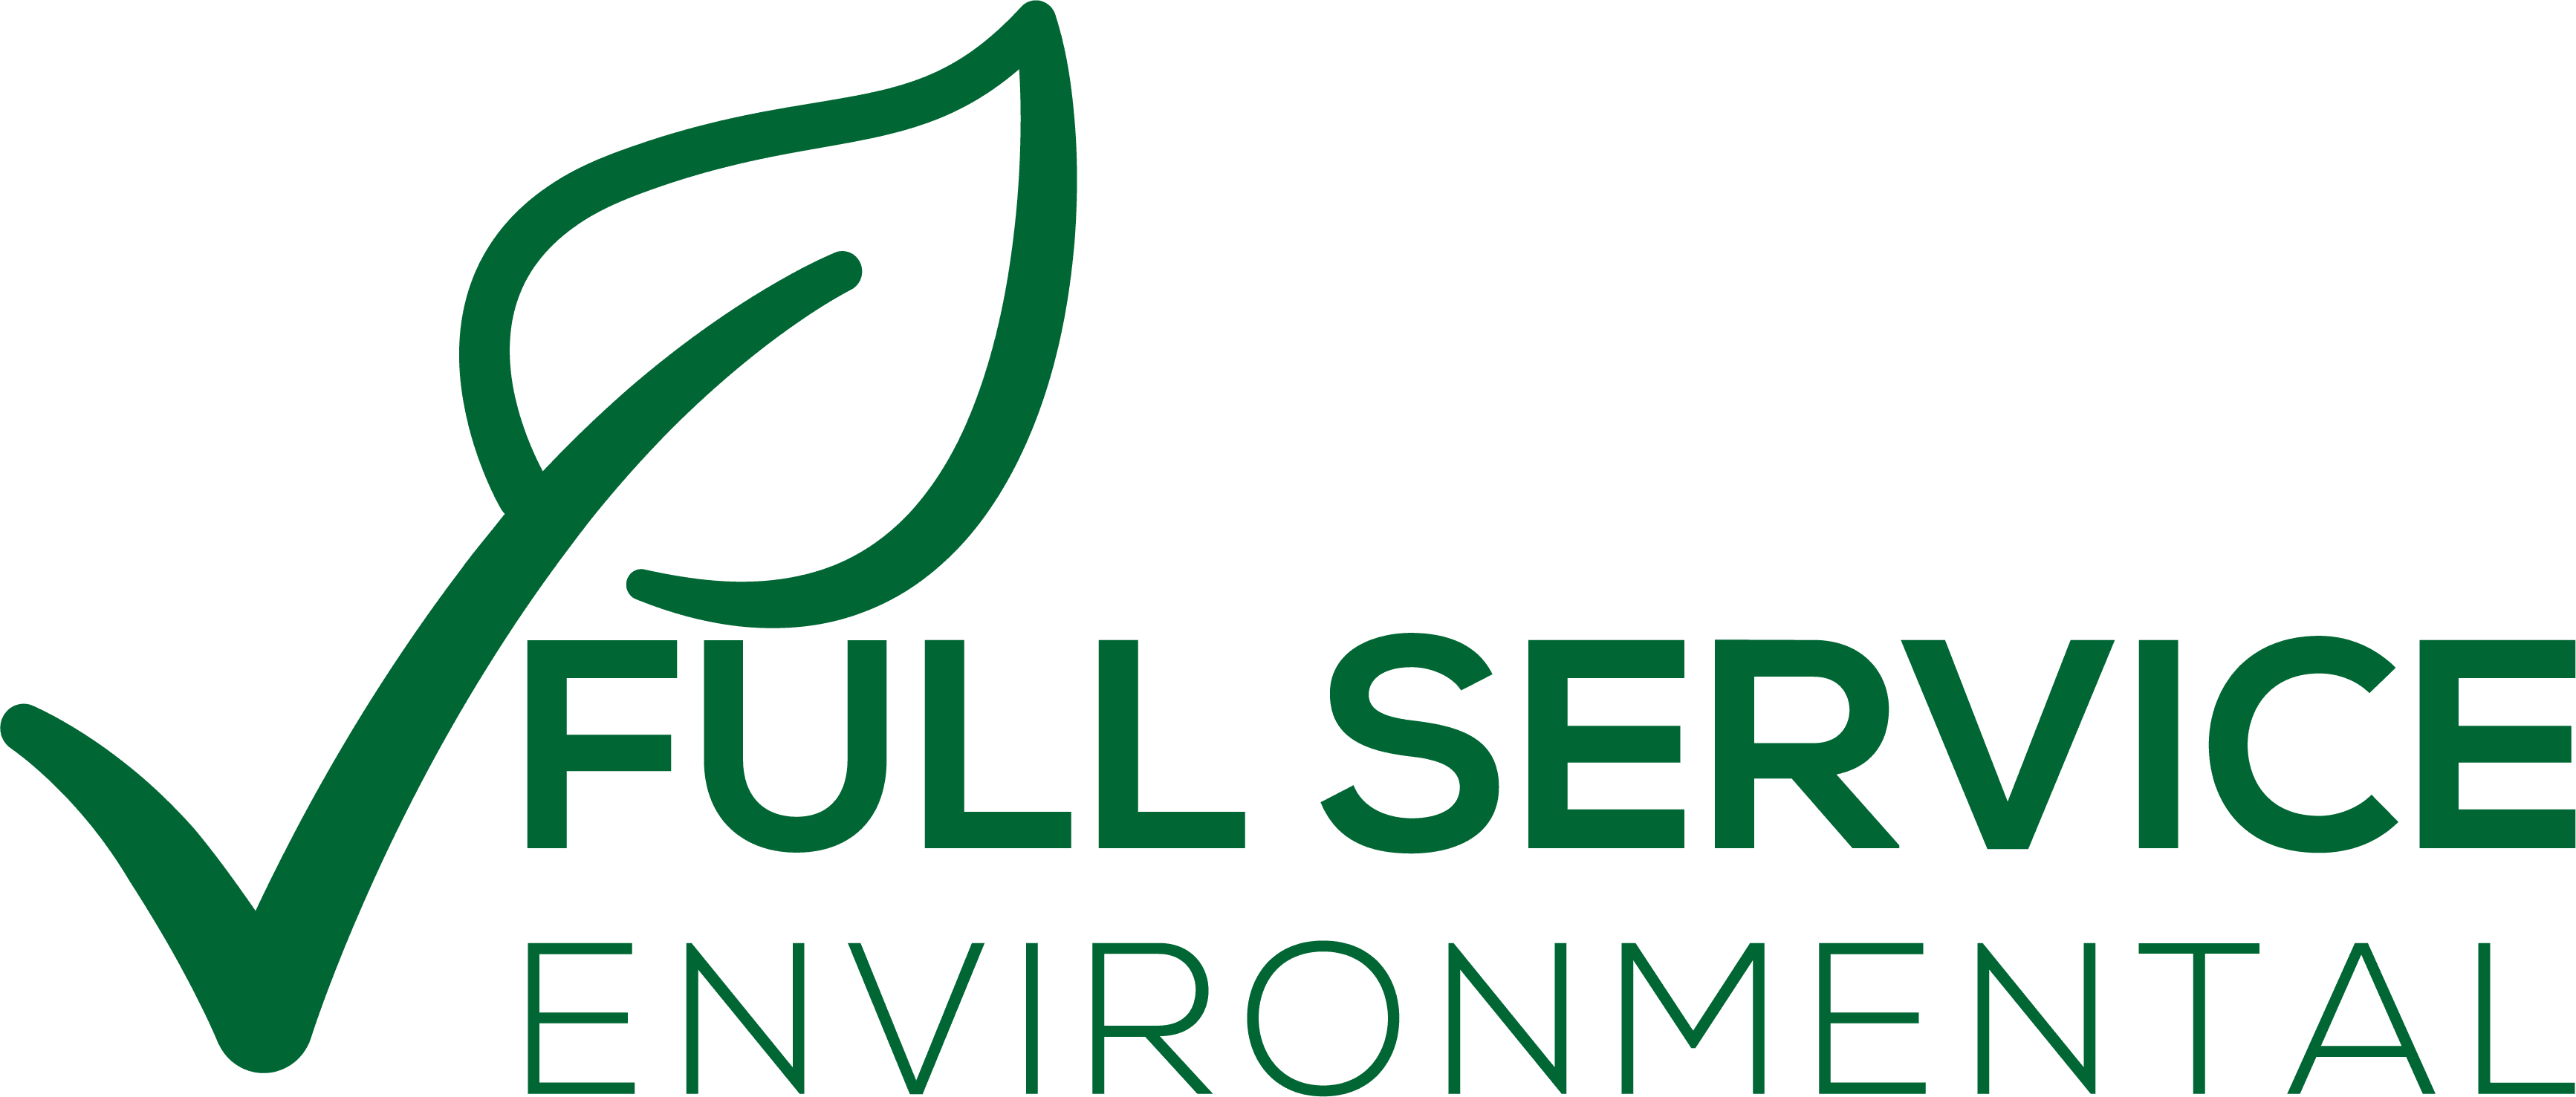 Full Service Environmental